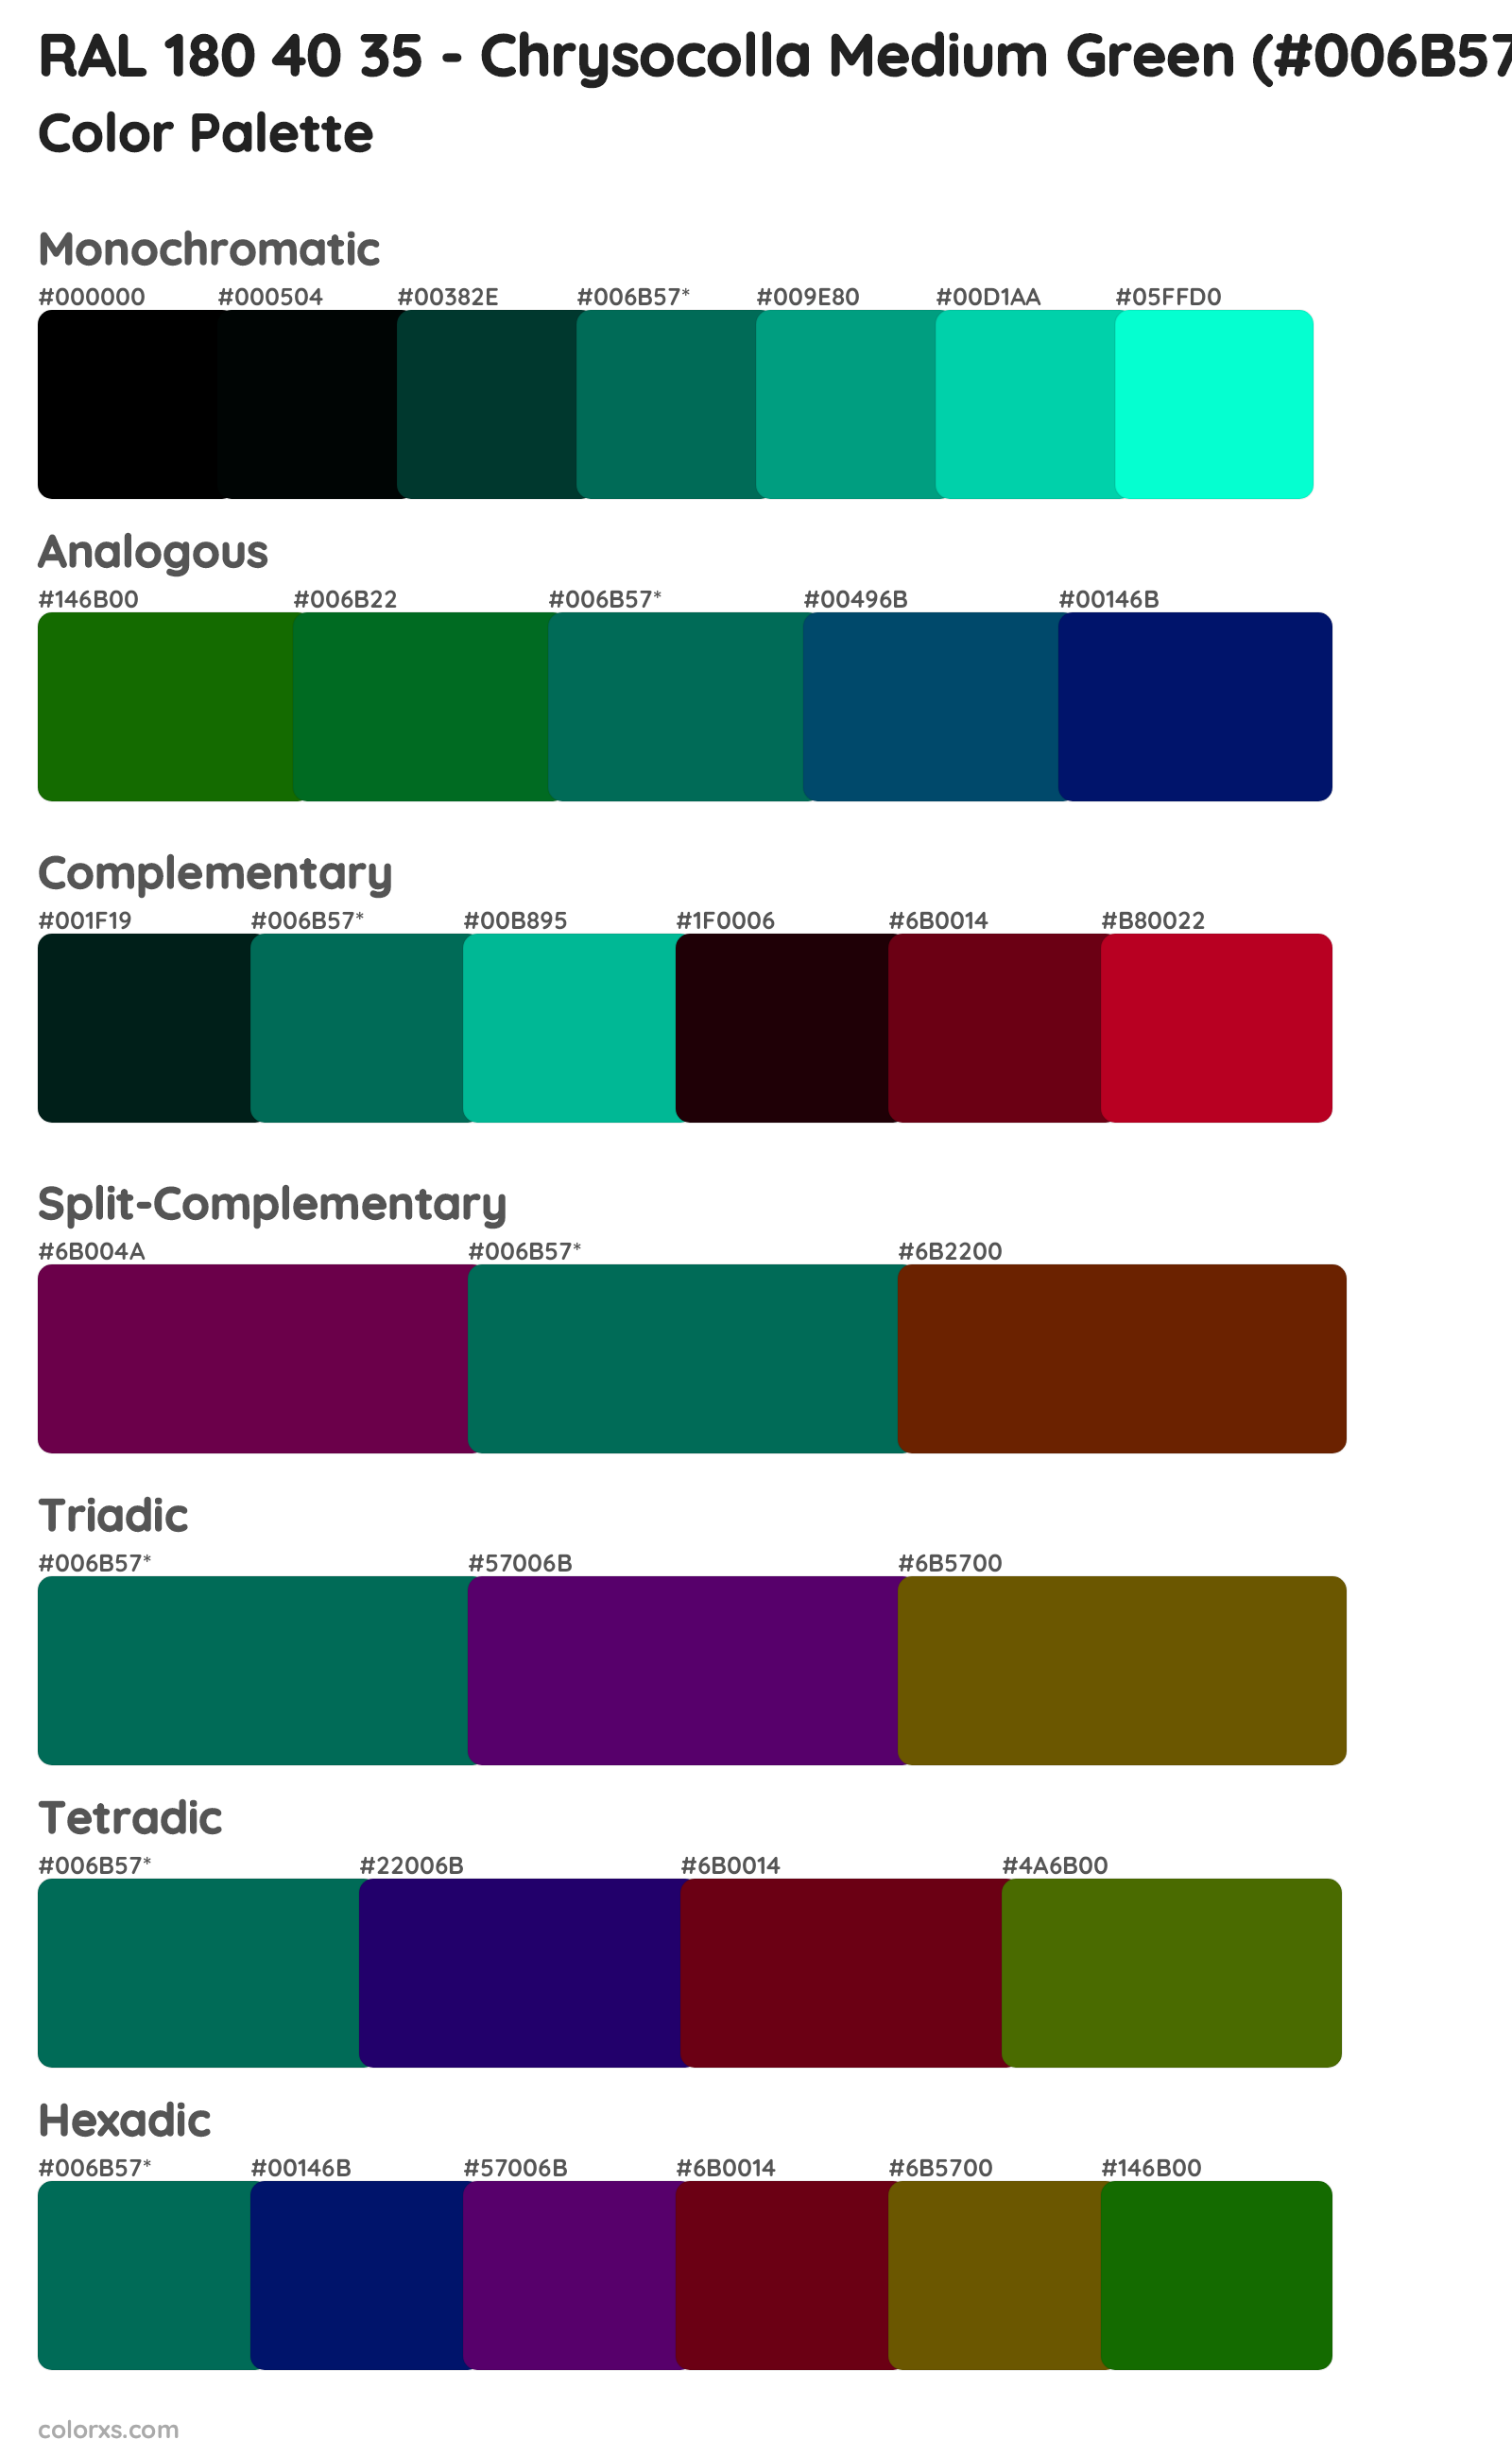 RAL 180 40 35 - Chrysocolla Medium Green Color Scheme Palettes